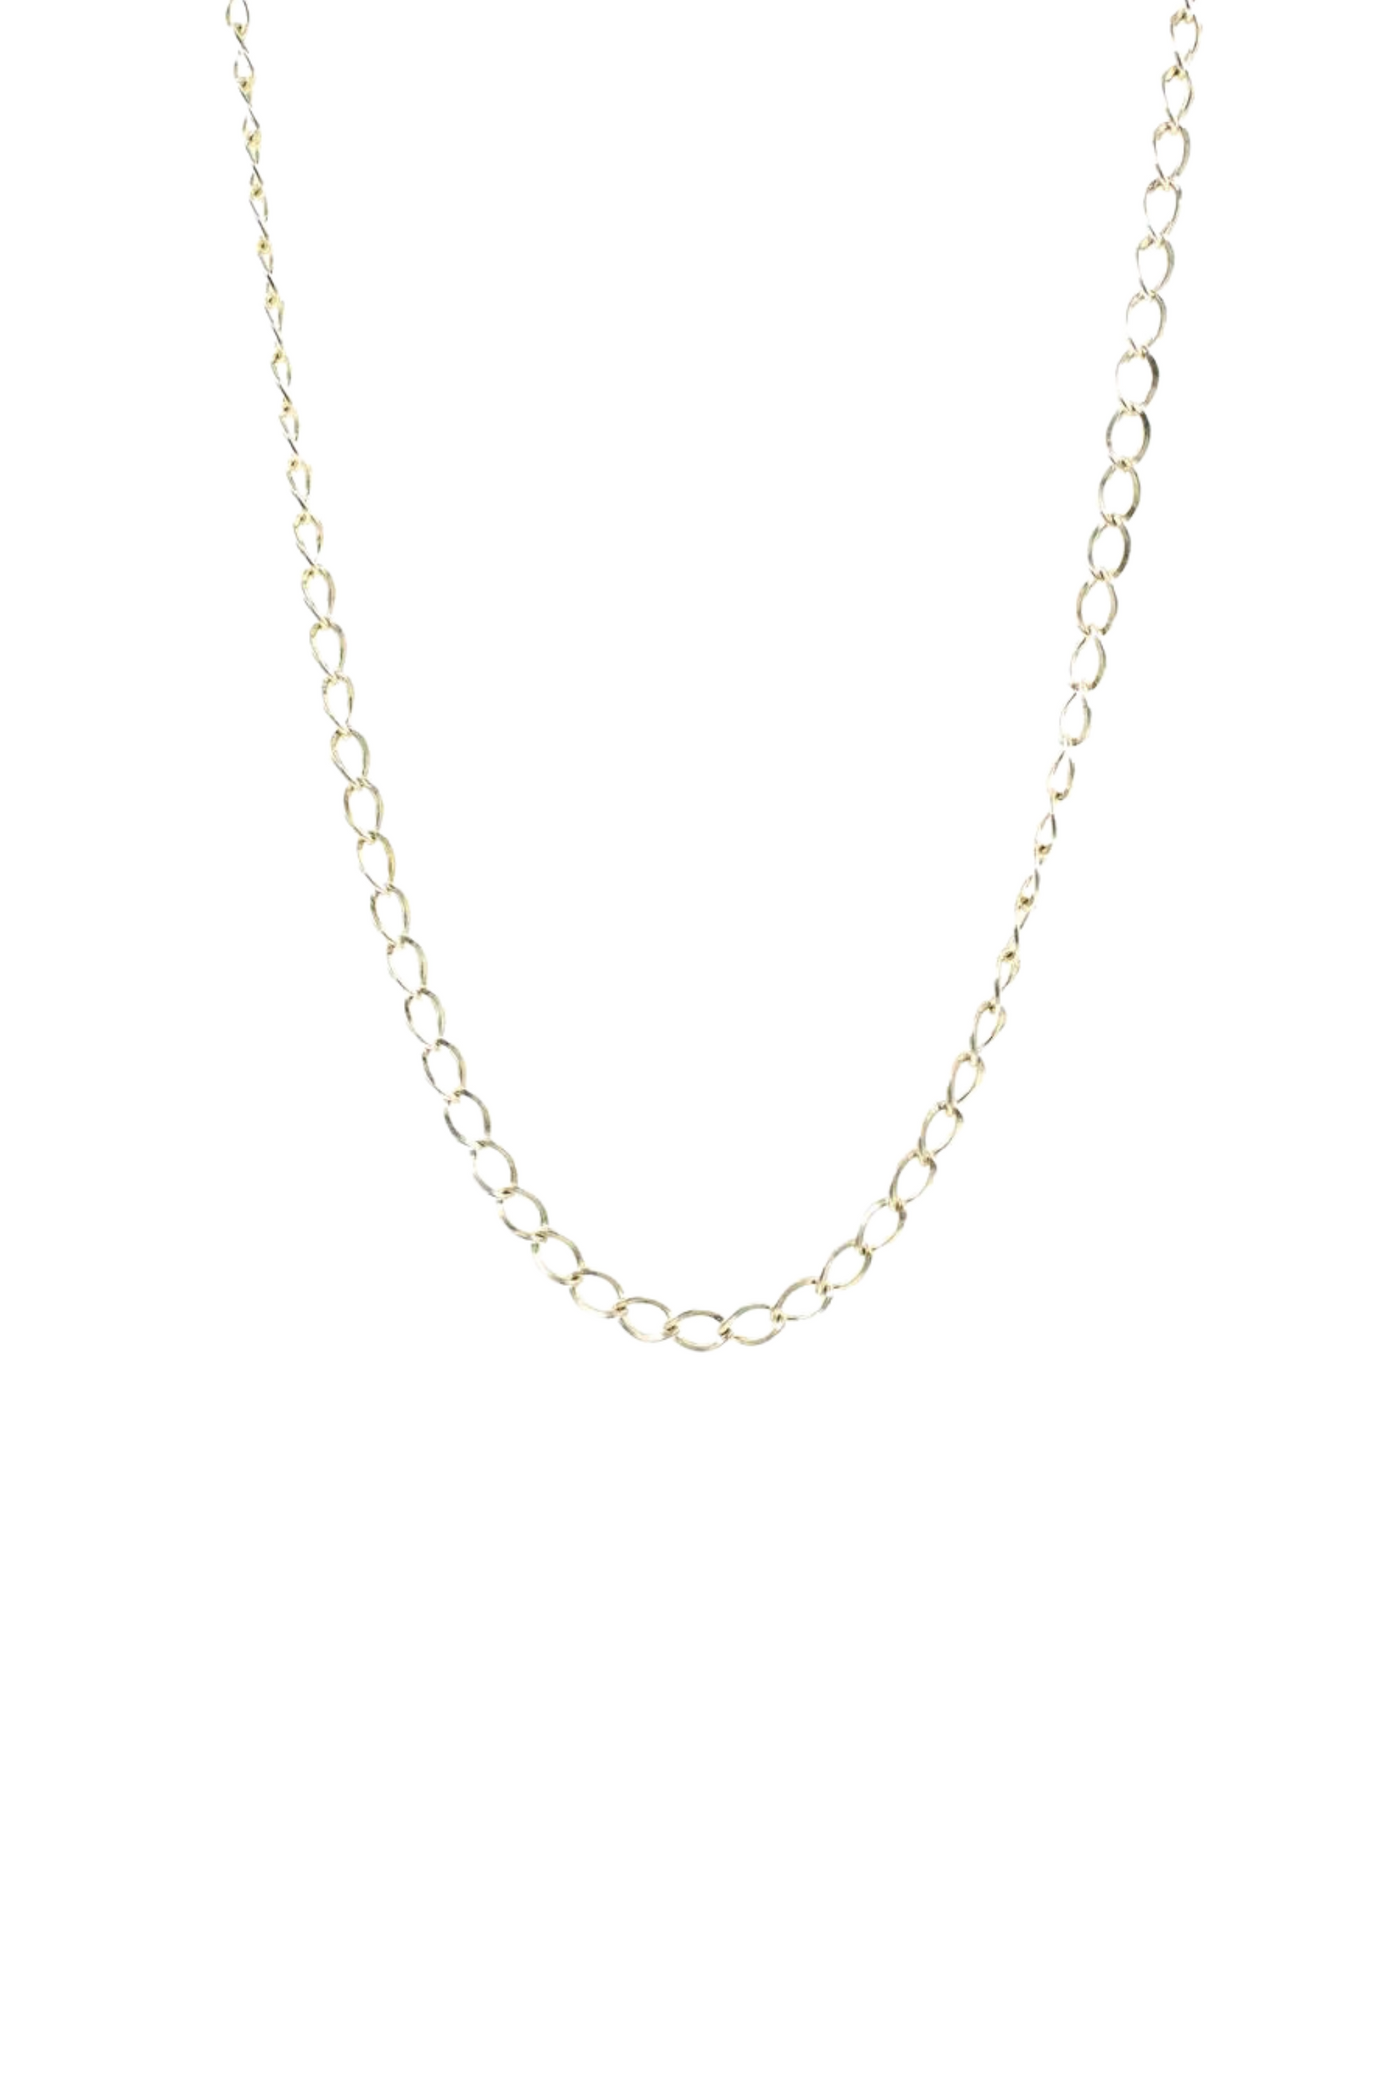 Caliente Chain Necklace